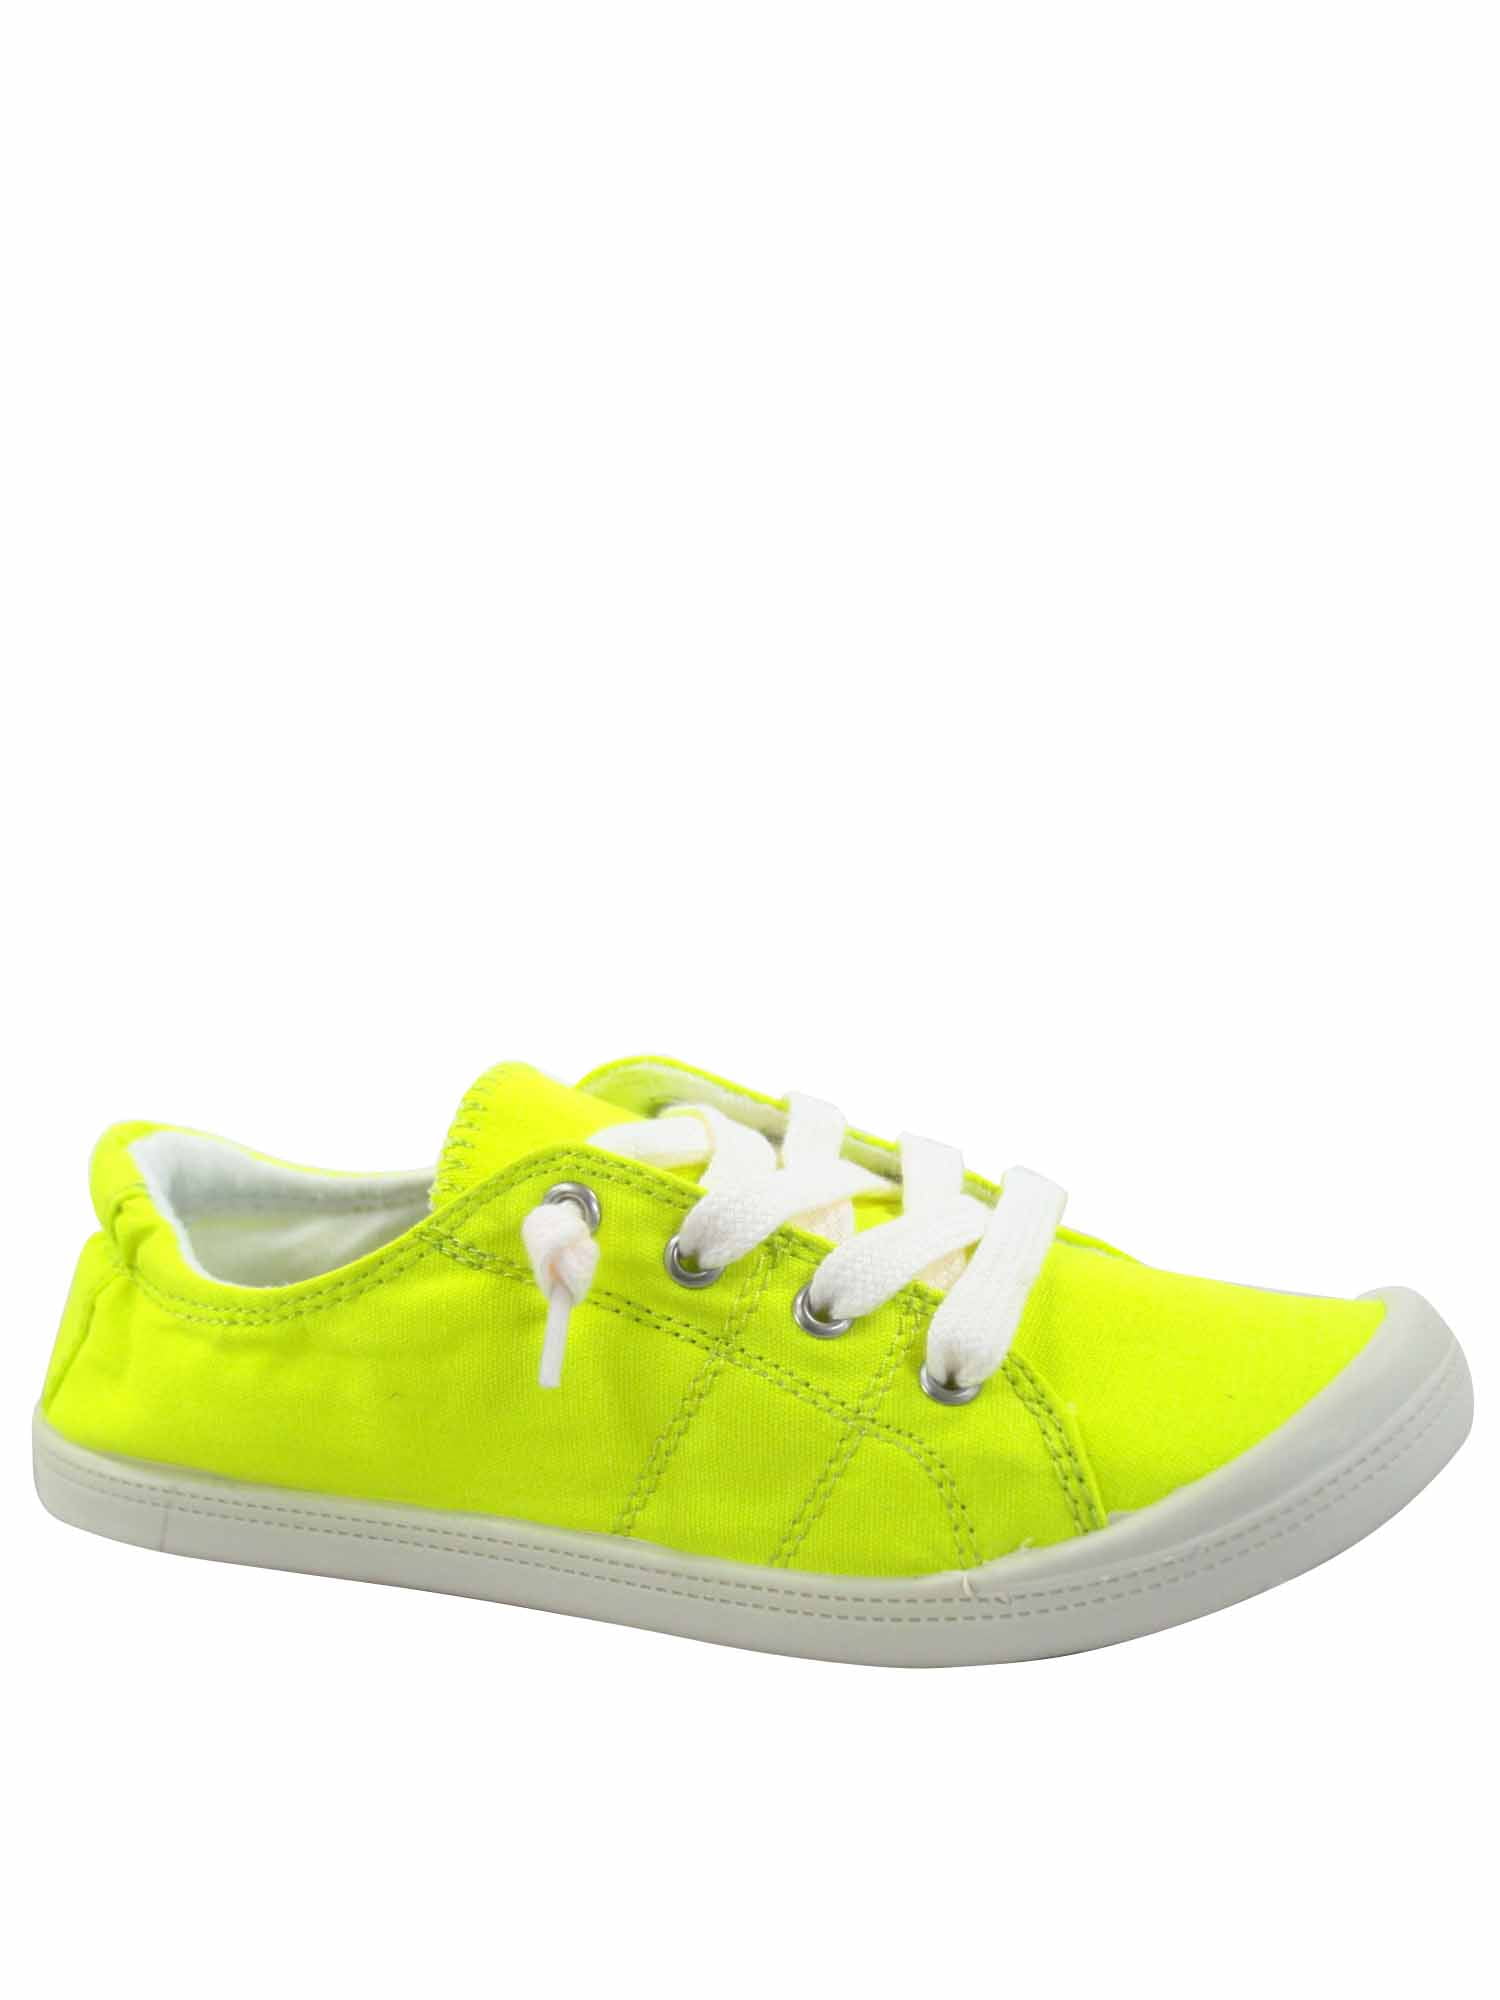 Yellow Shoes : Apparel - Walmart.com 